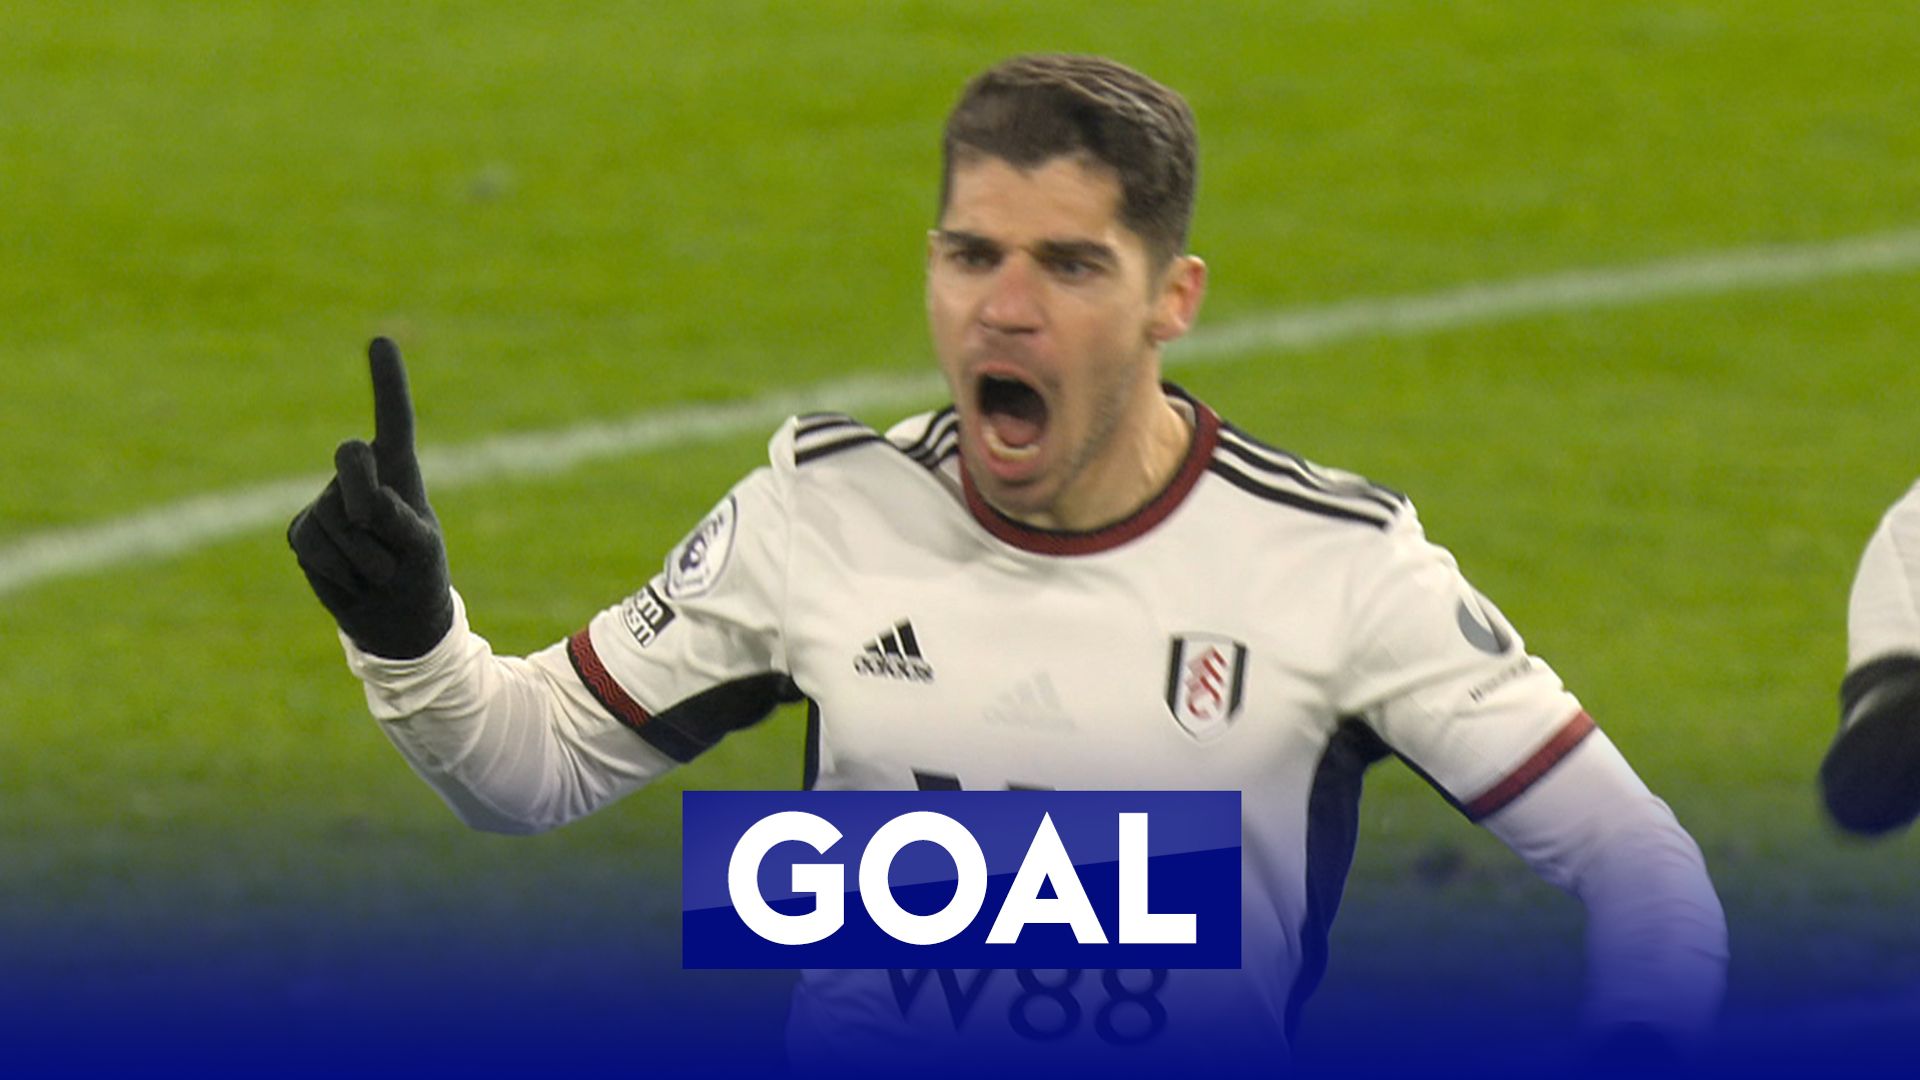 Solomon scores a stunner to pull Fulham level!